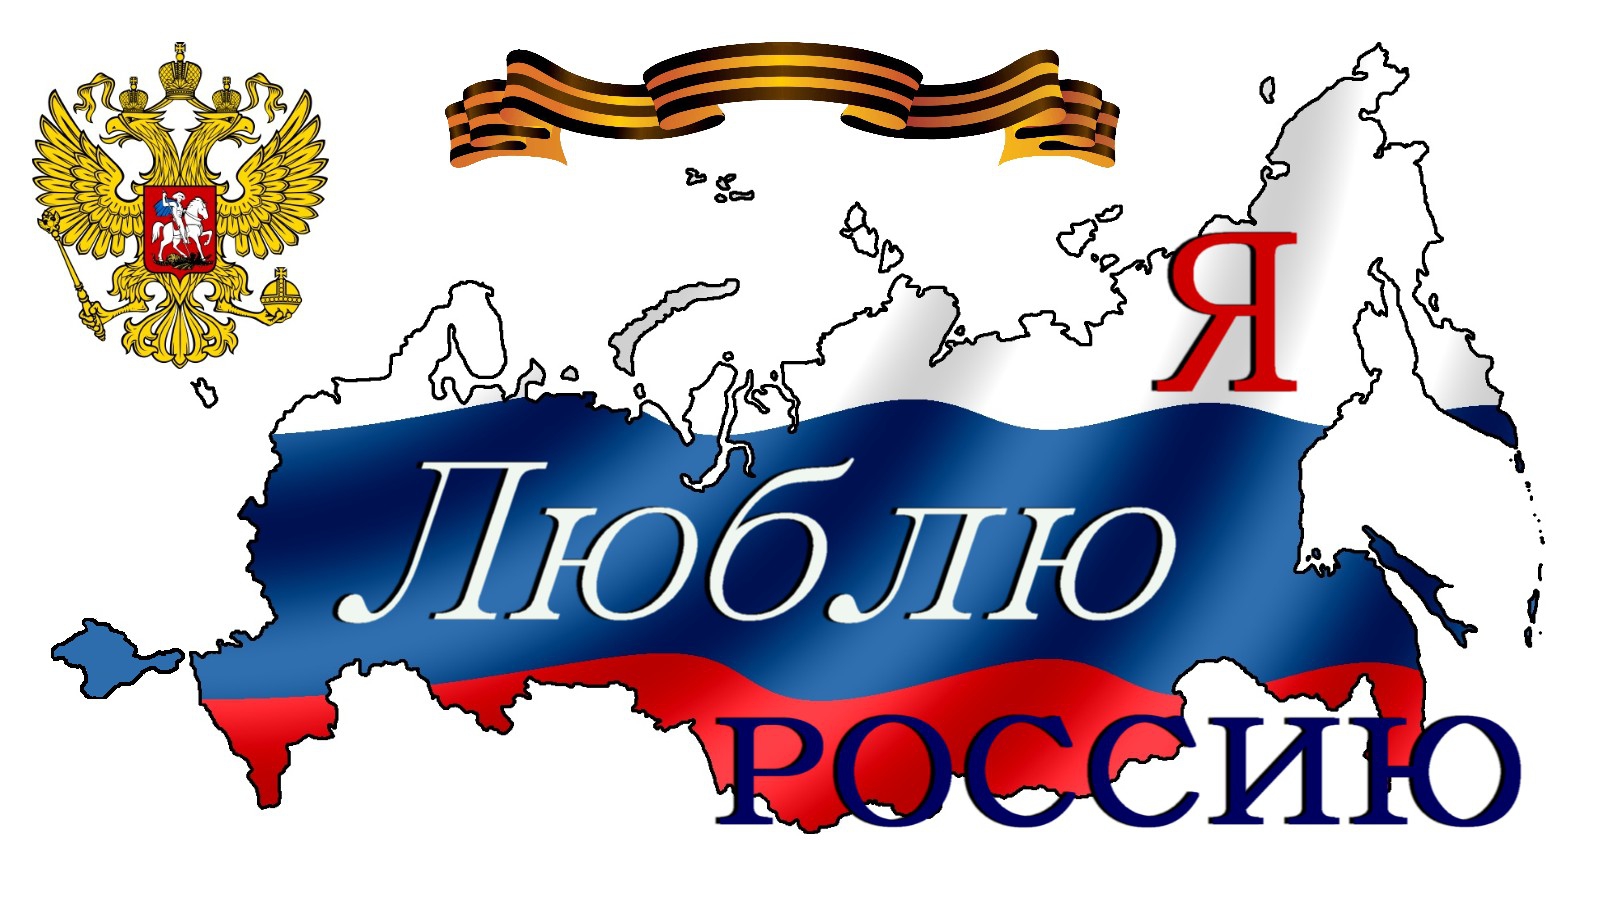 Мир люблю страна. Я люблю Россию. Баннер я люблю Россию. Плакат я люблю Россию. Надпись я люблю Россию.